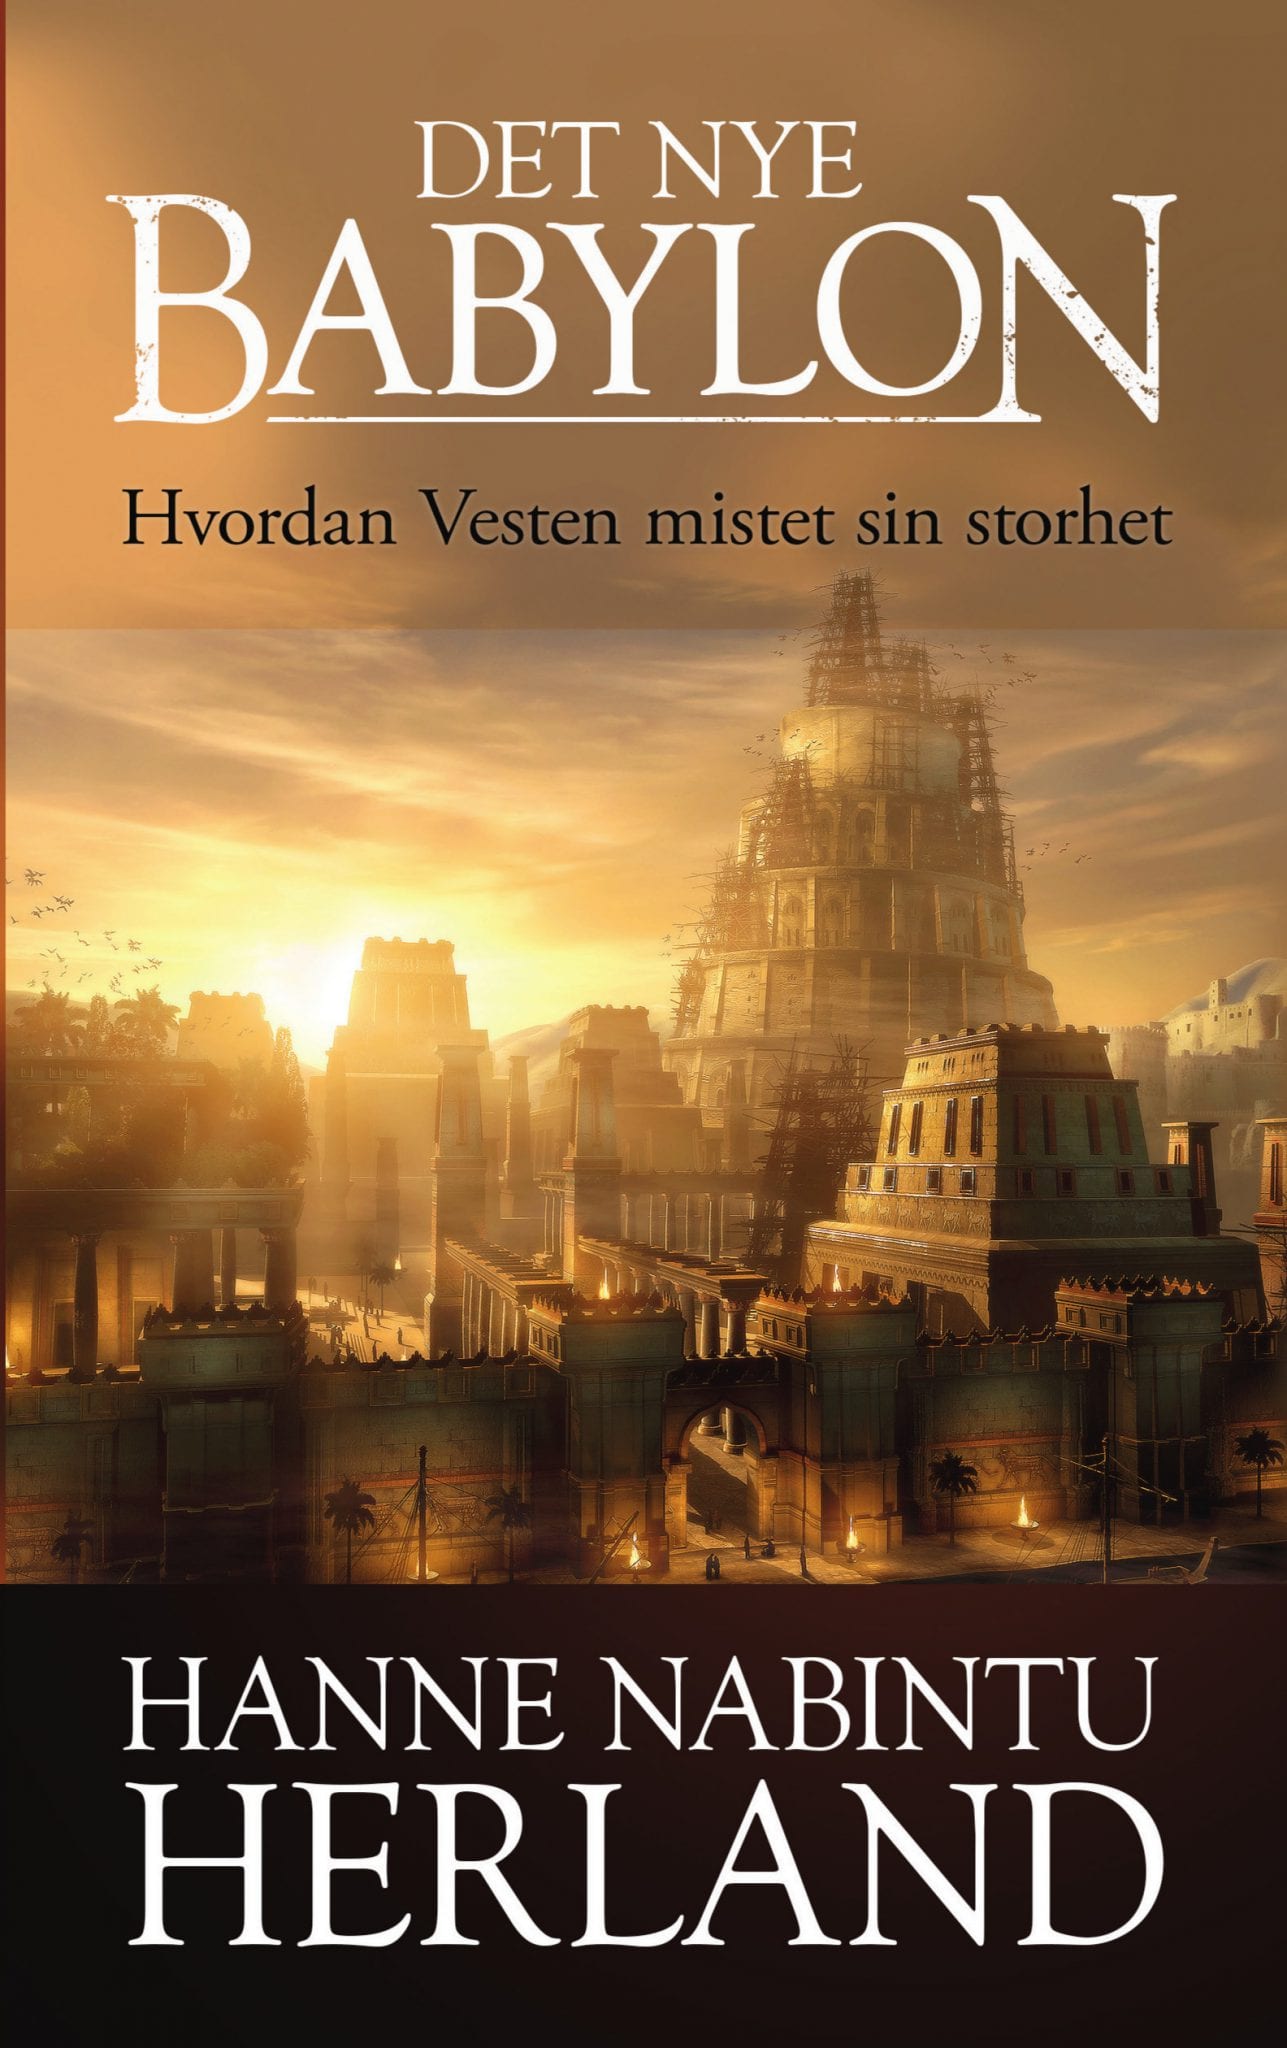 Solidaritetens sammenbrudd: Hanne Nabintu Herland om sin nye bok Det Nye Babylon